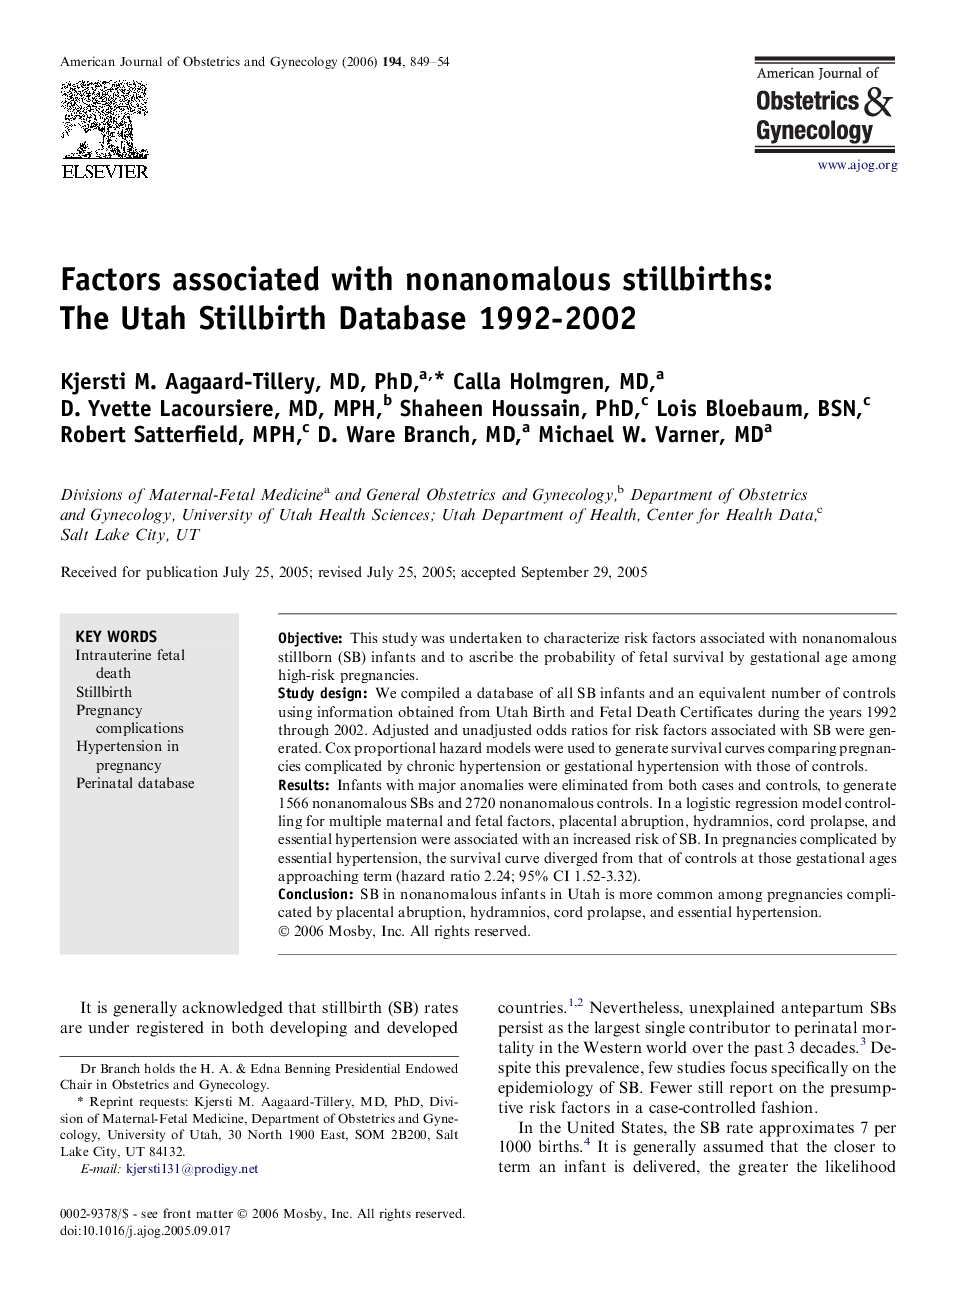 Factors associated with nonanomalous stillbirths: The Utah Stillbirth Database 1992-2002 